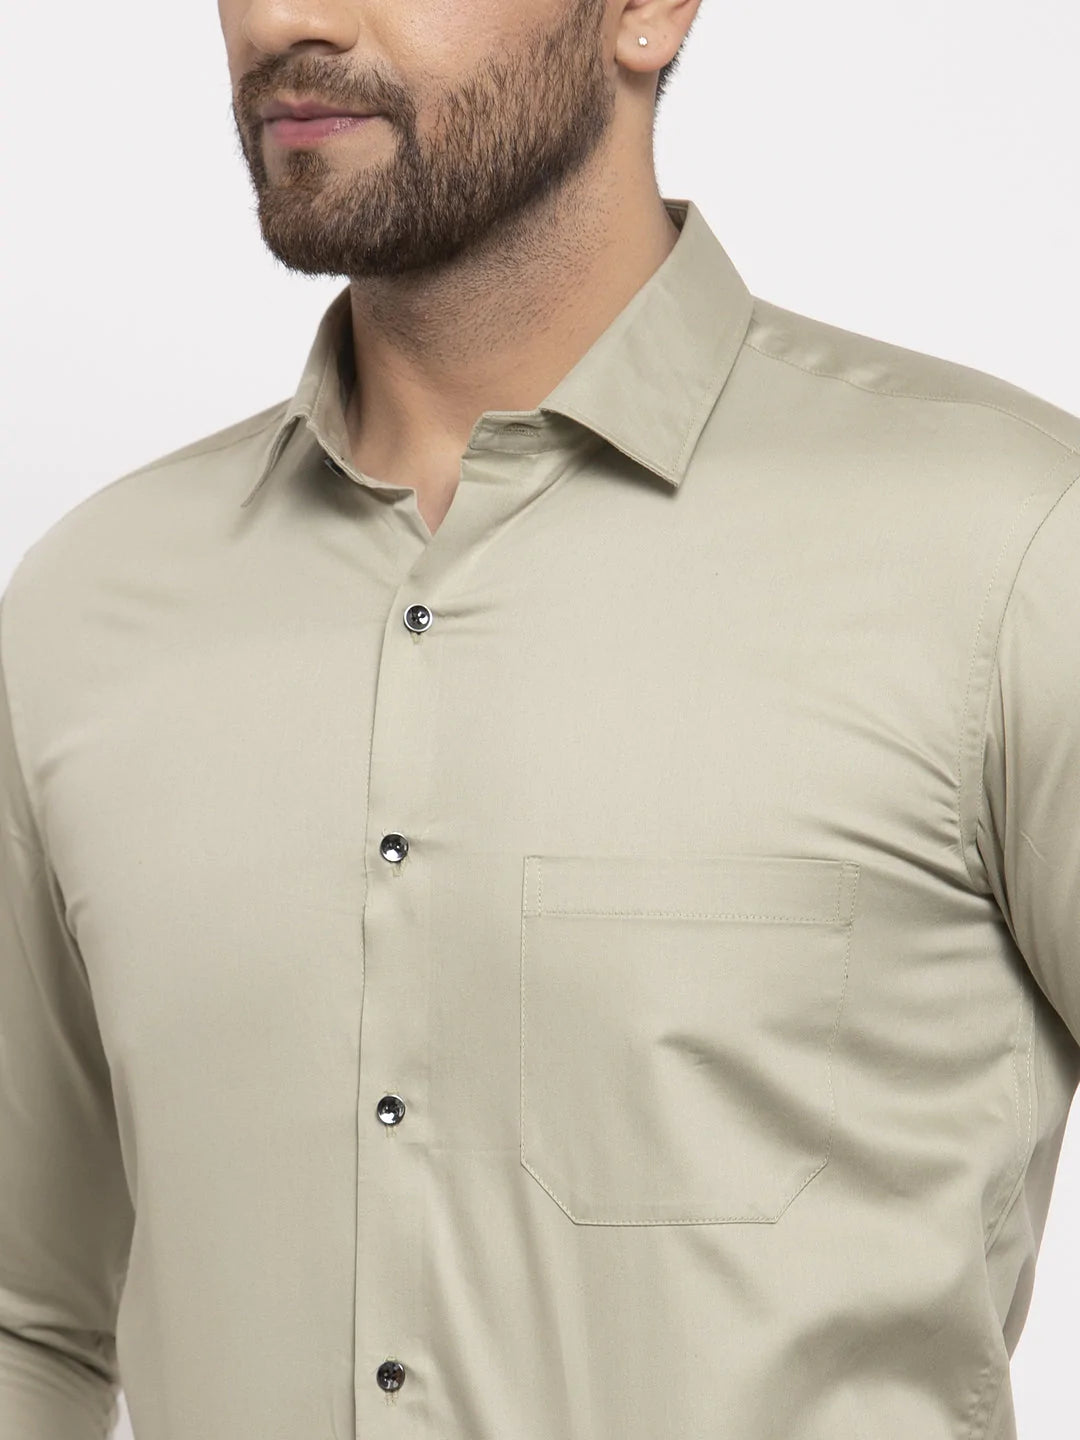 Jainish Silver Men's Cotton Solid Formal Shirt's ( SF 768Steel-Grey )